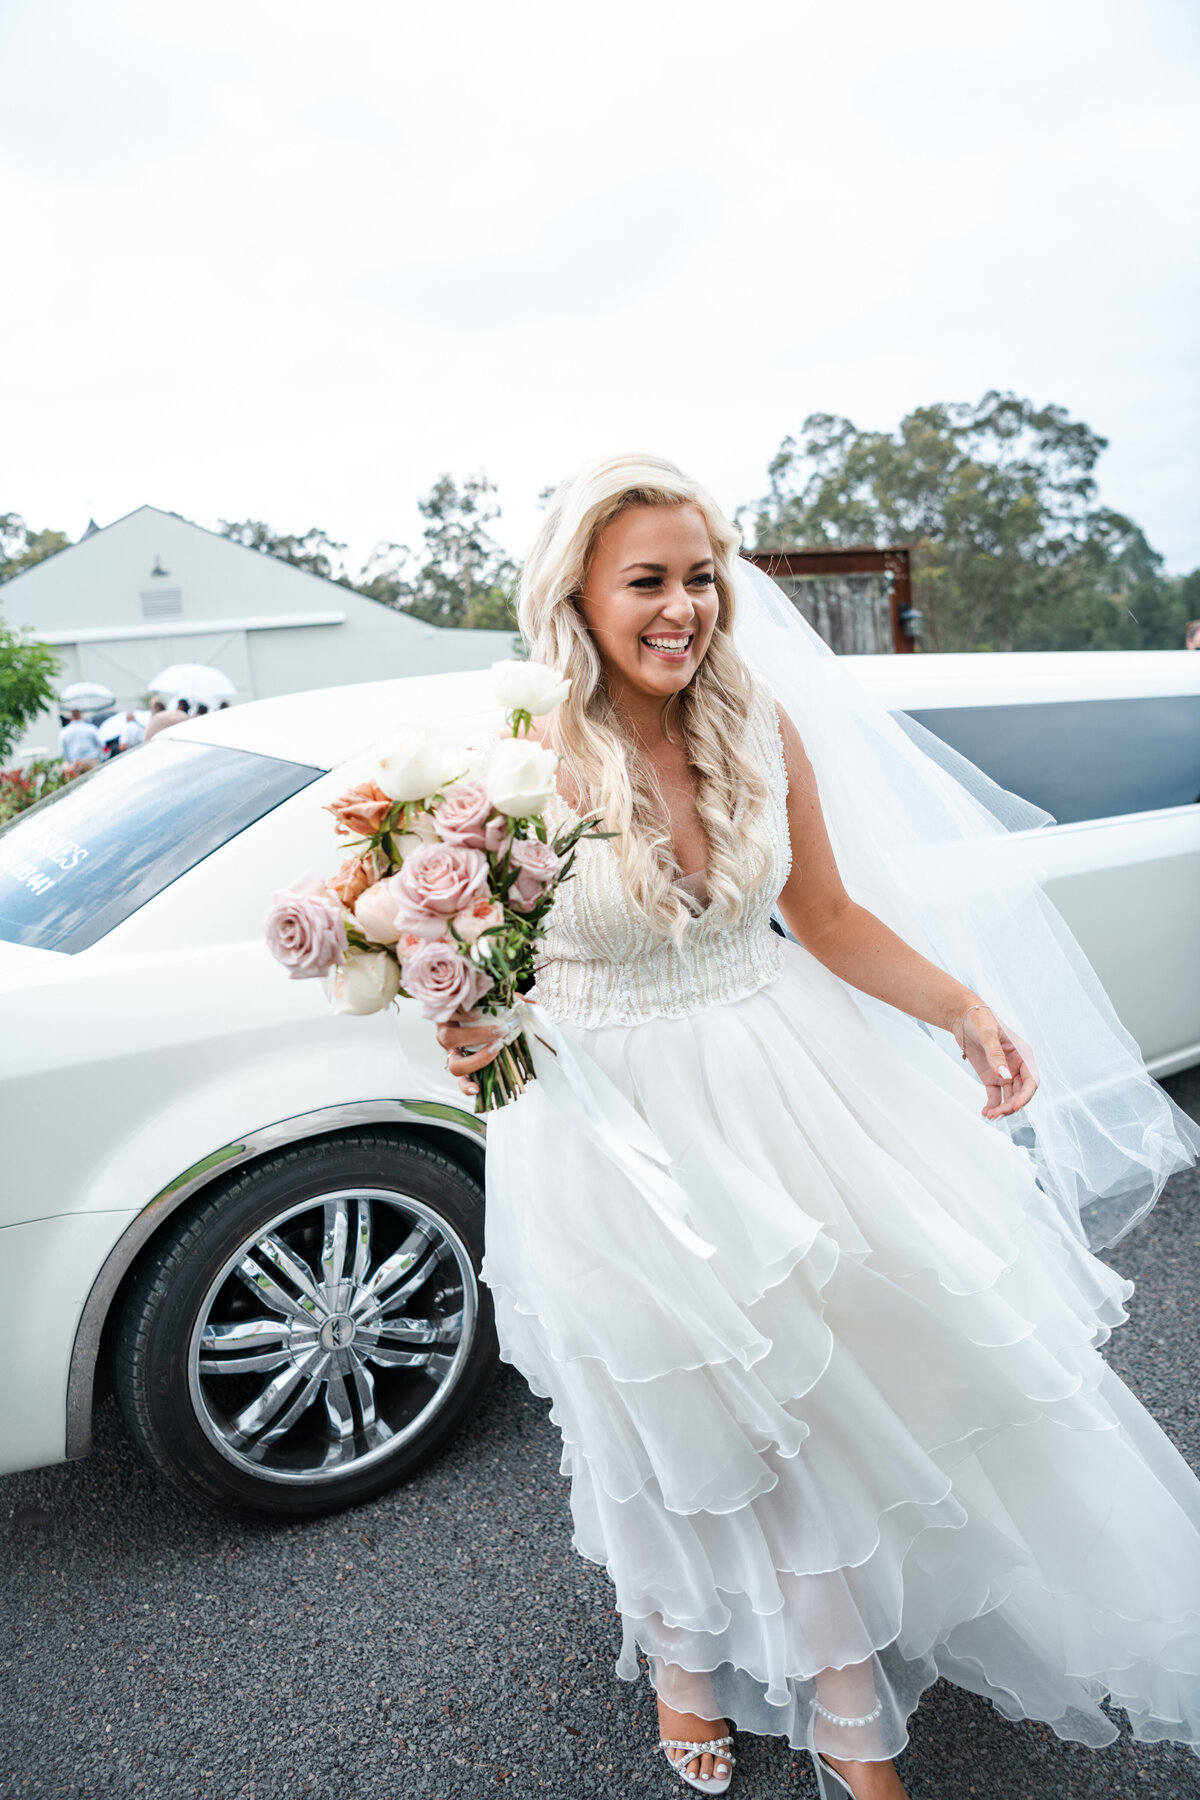 Abigail_Steven_Wedding_Images_Roam Ahead Weddings - 269